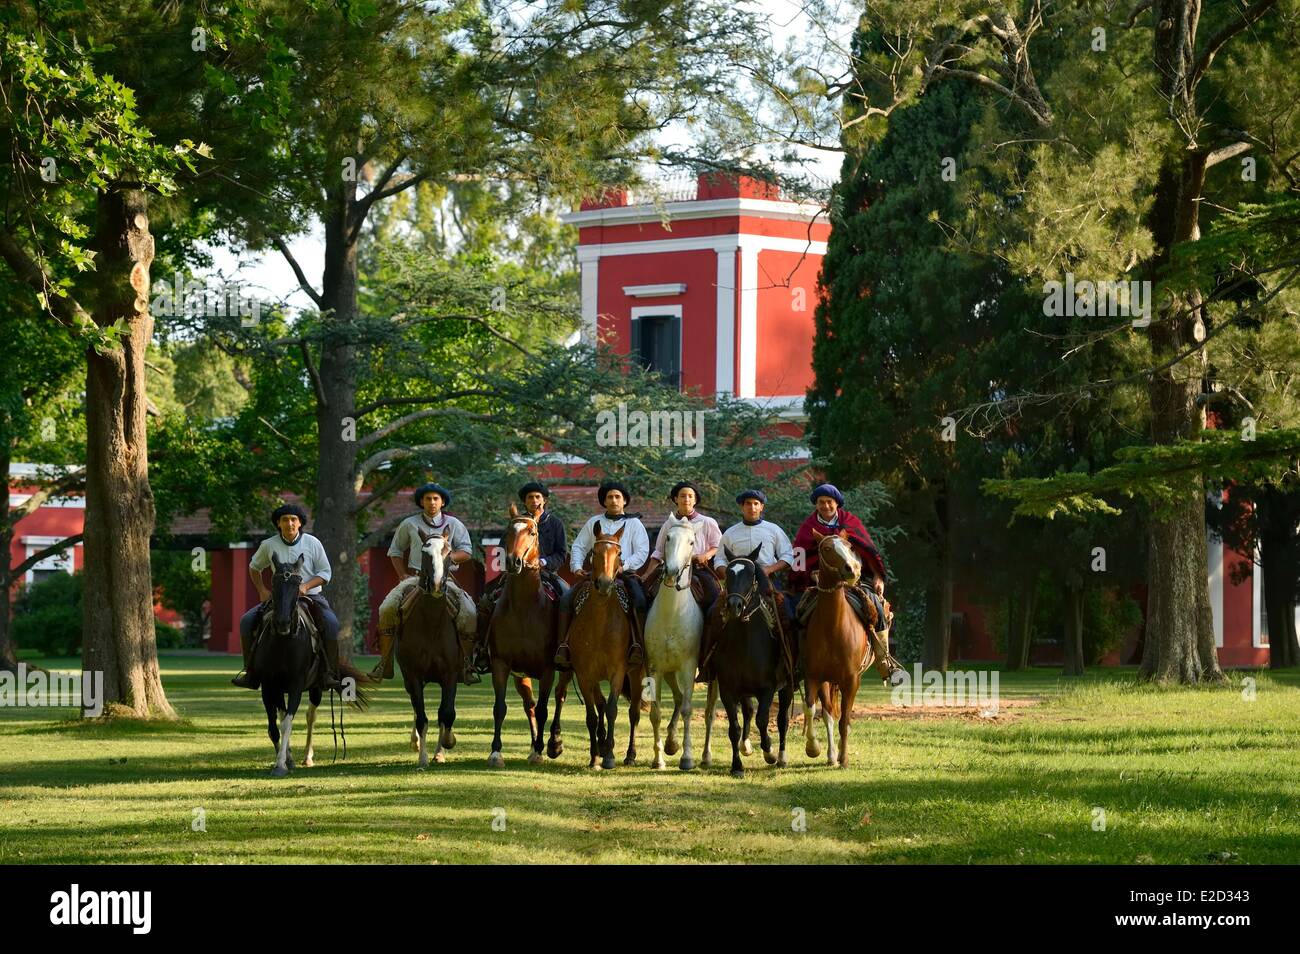 Argentina Buenos Aires Province San Antonio de Areco group of gauchos on horseback in front of the estancia La Bamba de Areco Stock Photo